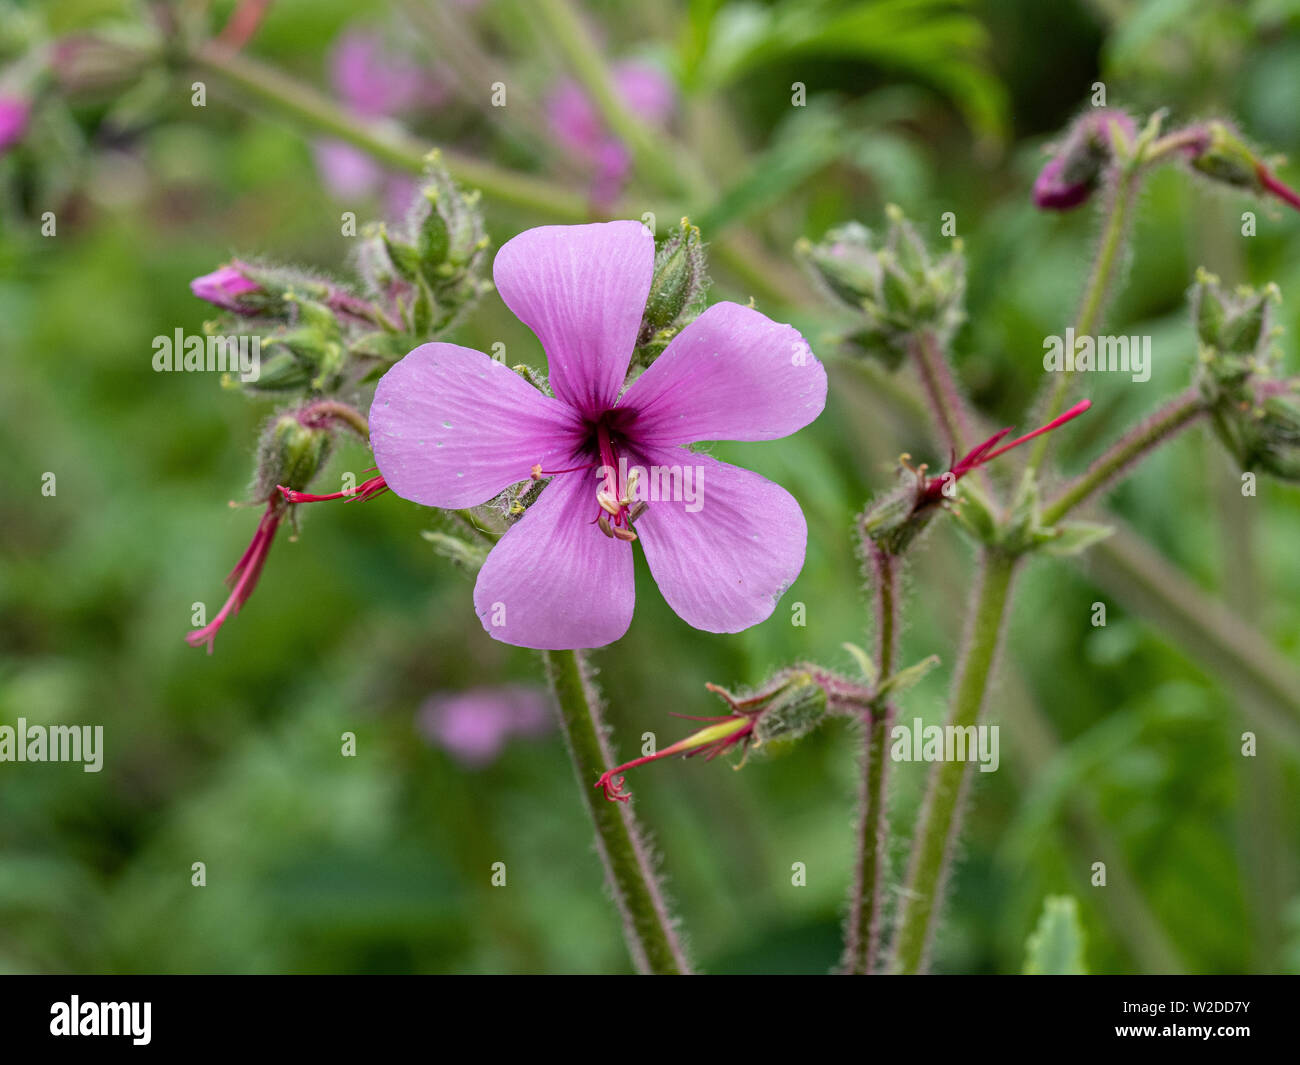 A close up of a single deep pink flower of Geranium palmatum Stock Photo